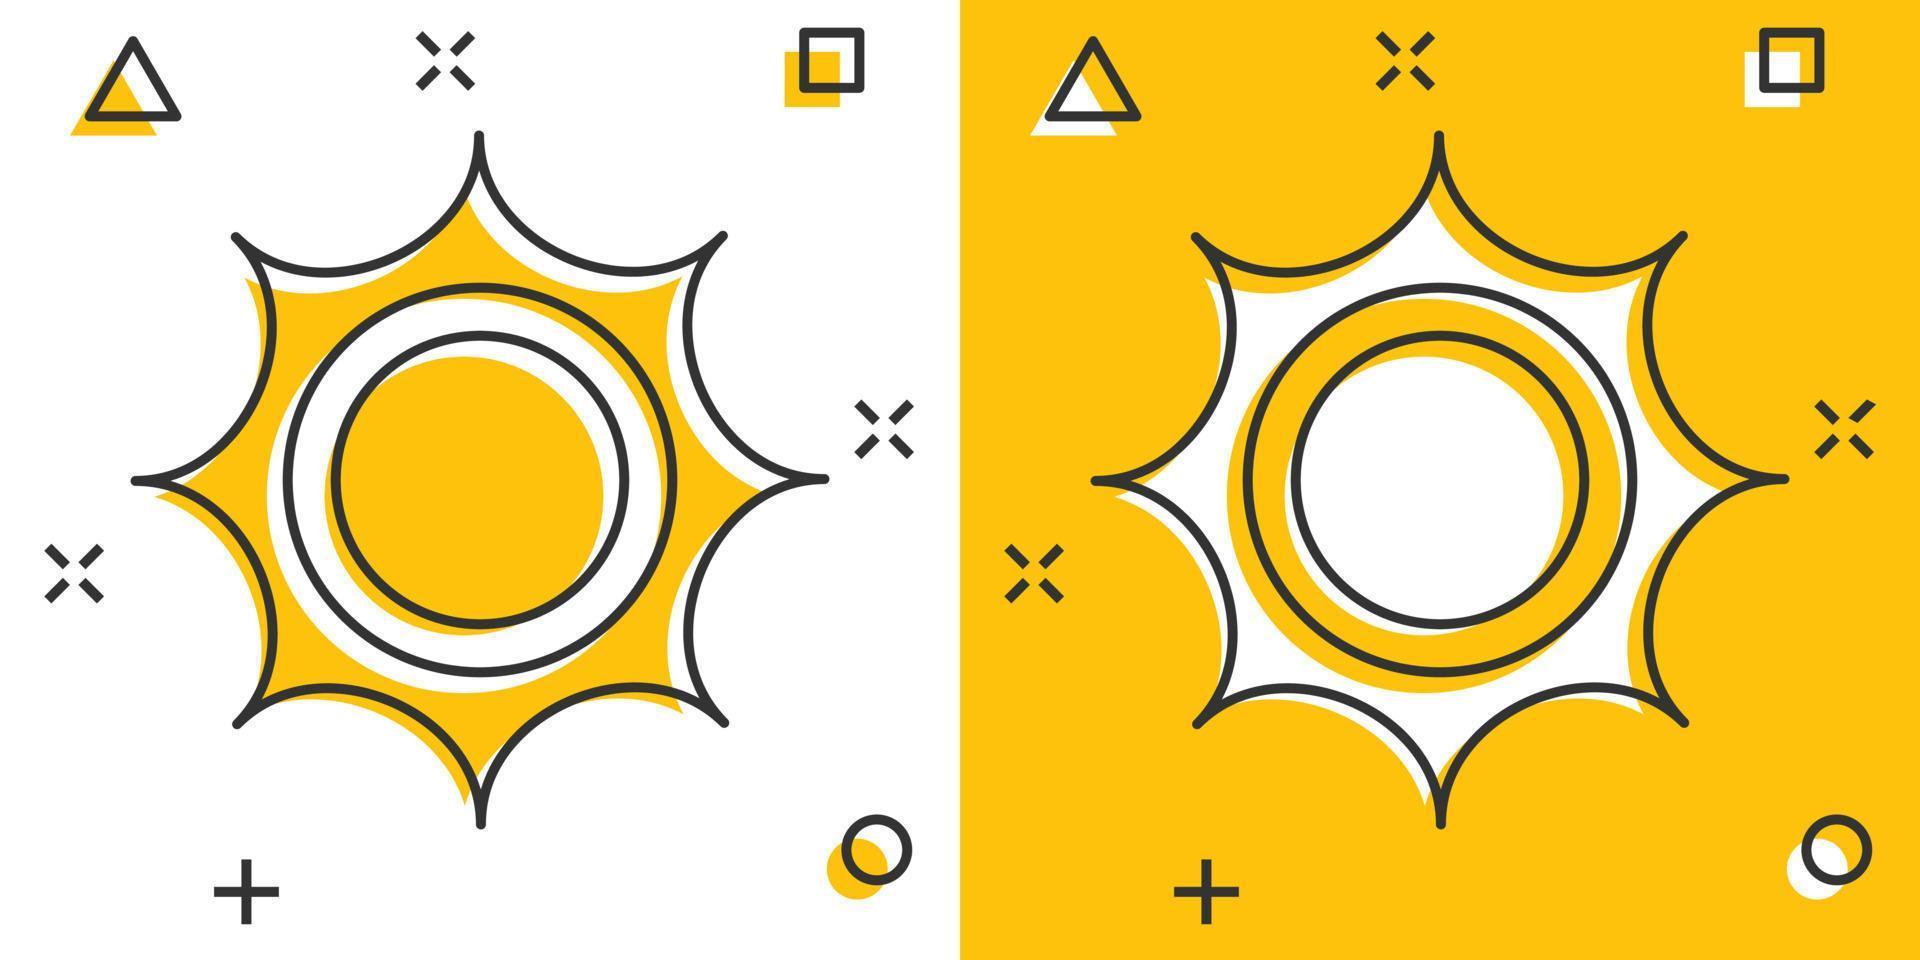 Vektor-Cartoon-Sonnensymbol im Comic-Stil. Sommersonnenscheinkonzept-Illustrationspiktogramm. Sun Business Splash-Effekt-Konzept. vektor